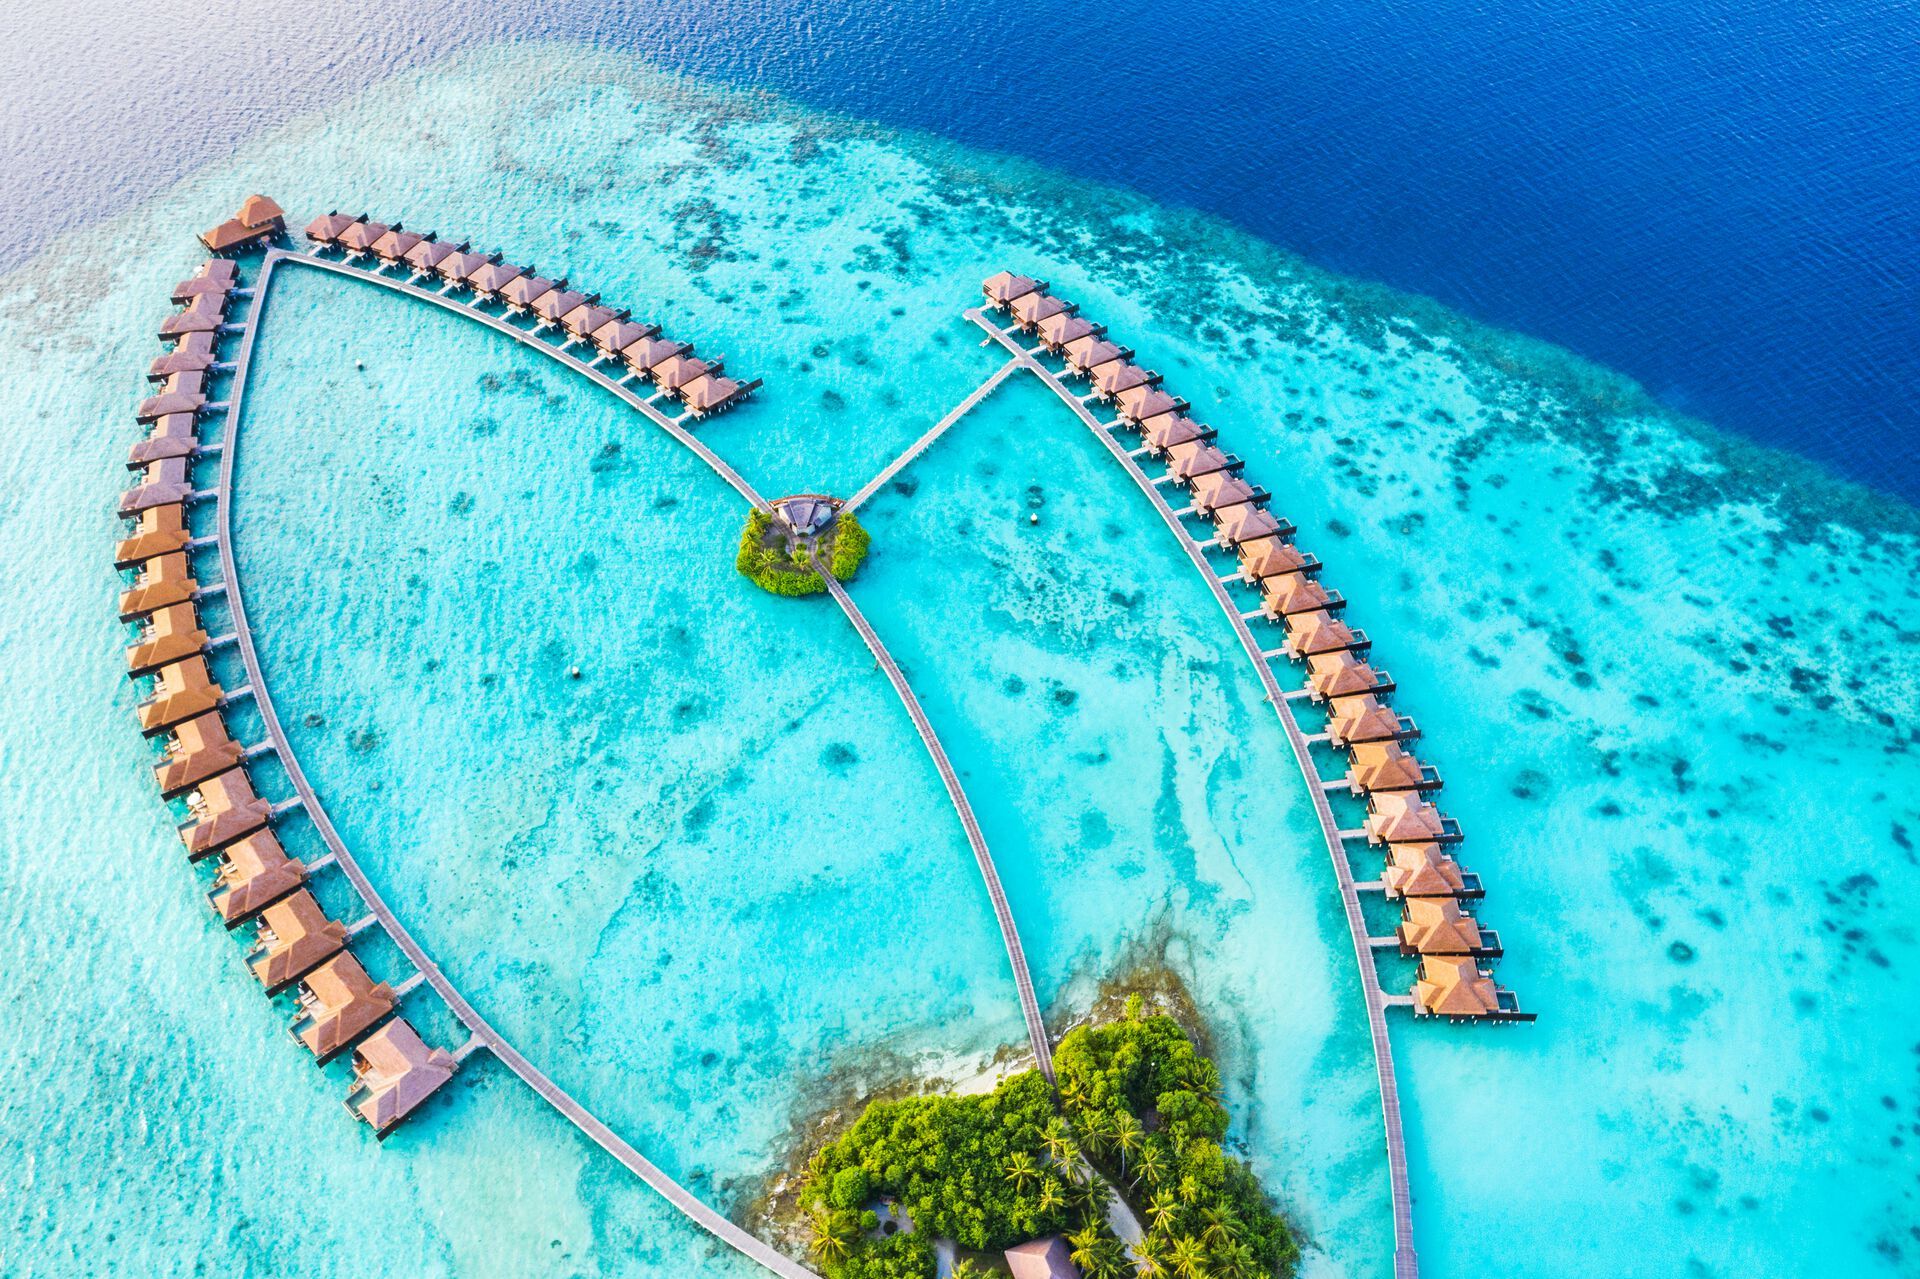 Maldives - Hotel Ayada Maldives 5* - transfert inclus